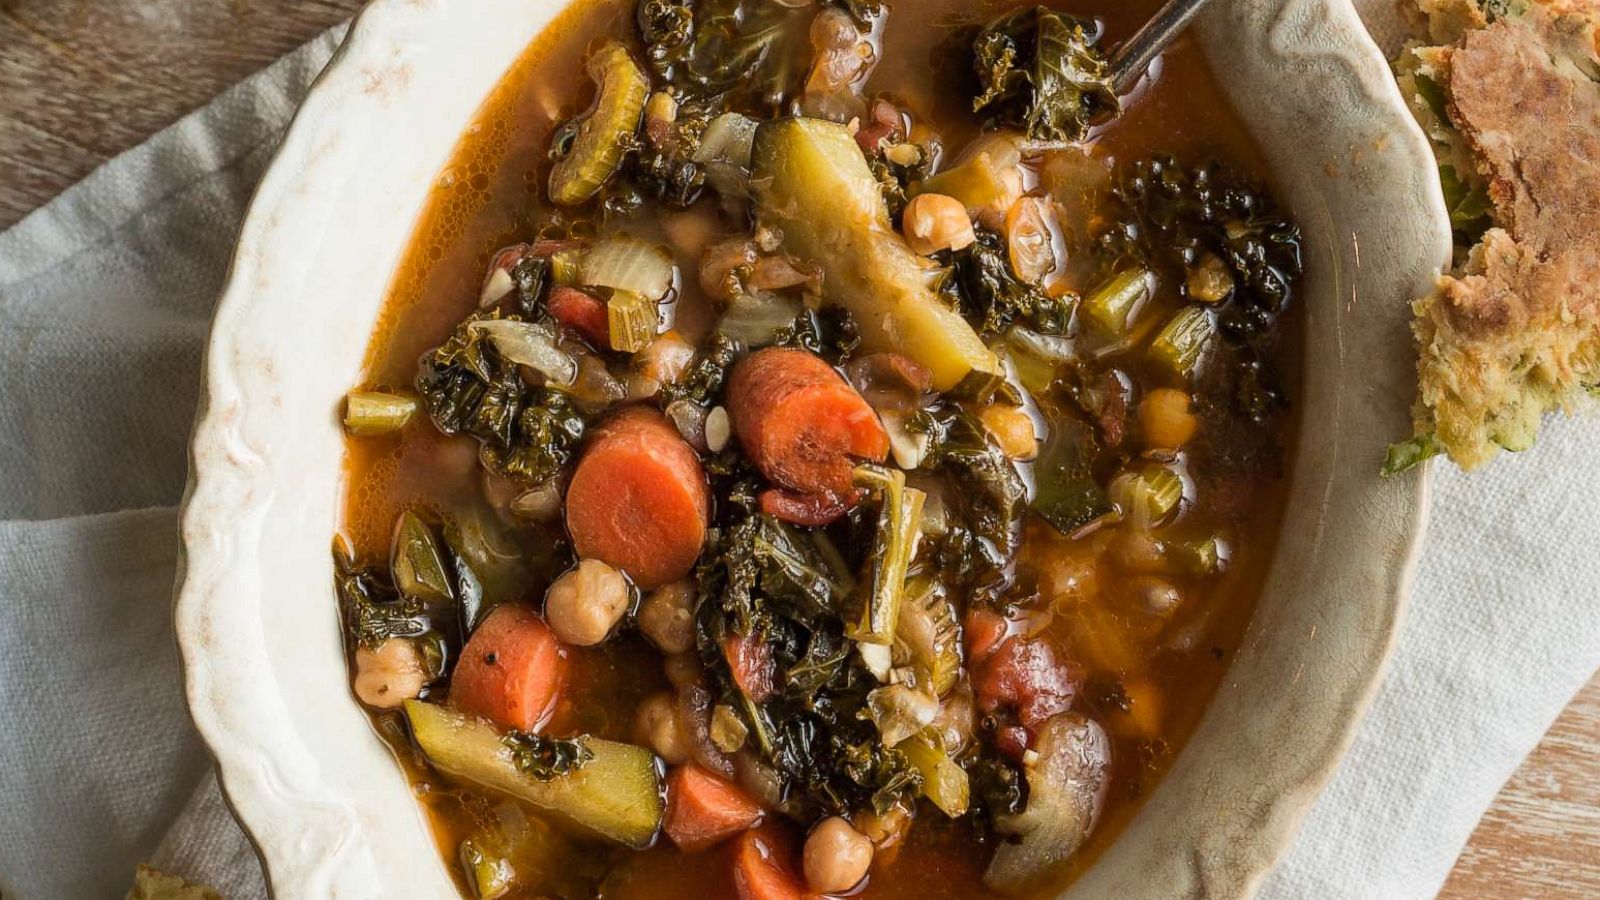 PHOTO: Chef Danielle Kartes' Tusacan vegetable & chickpea stew